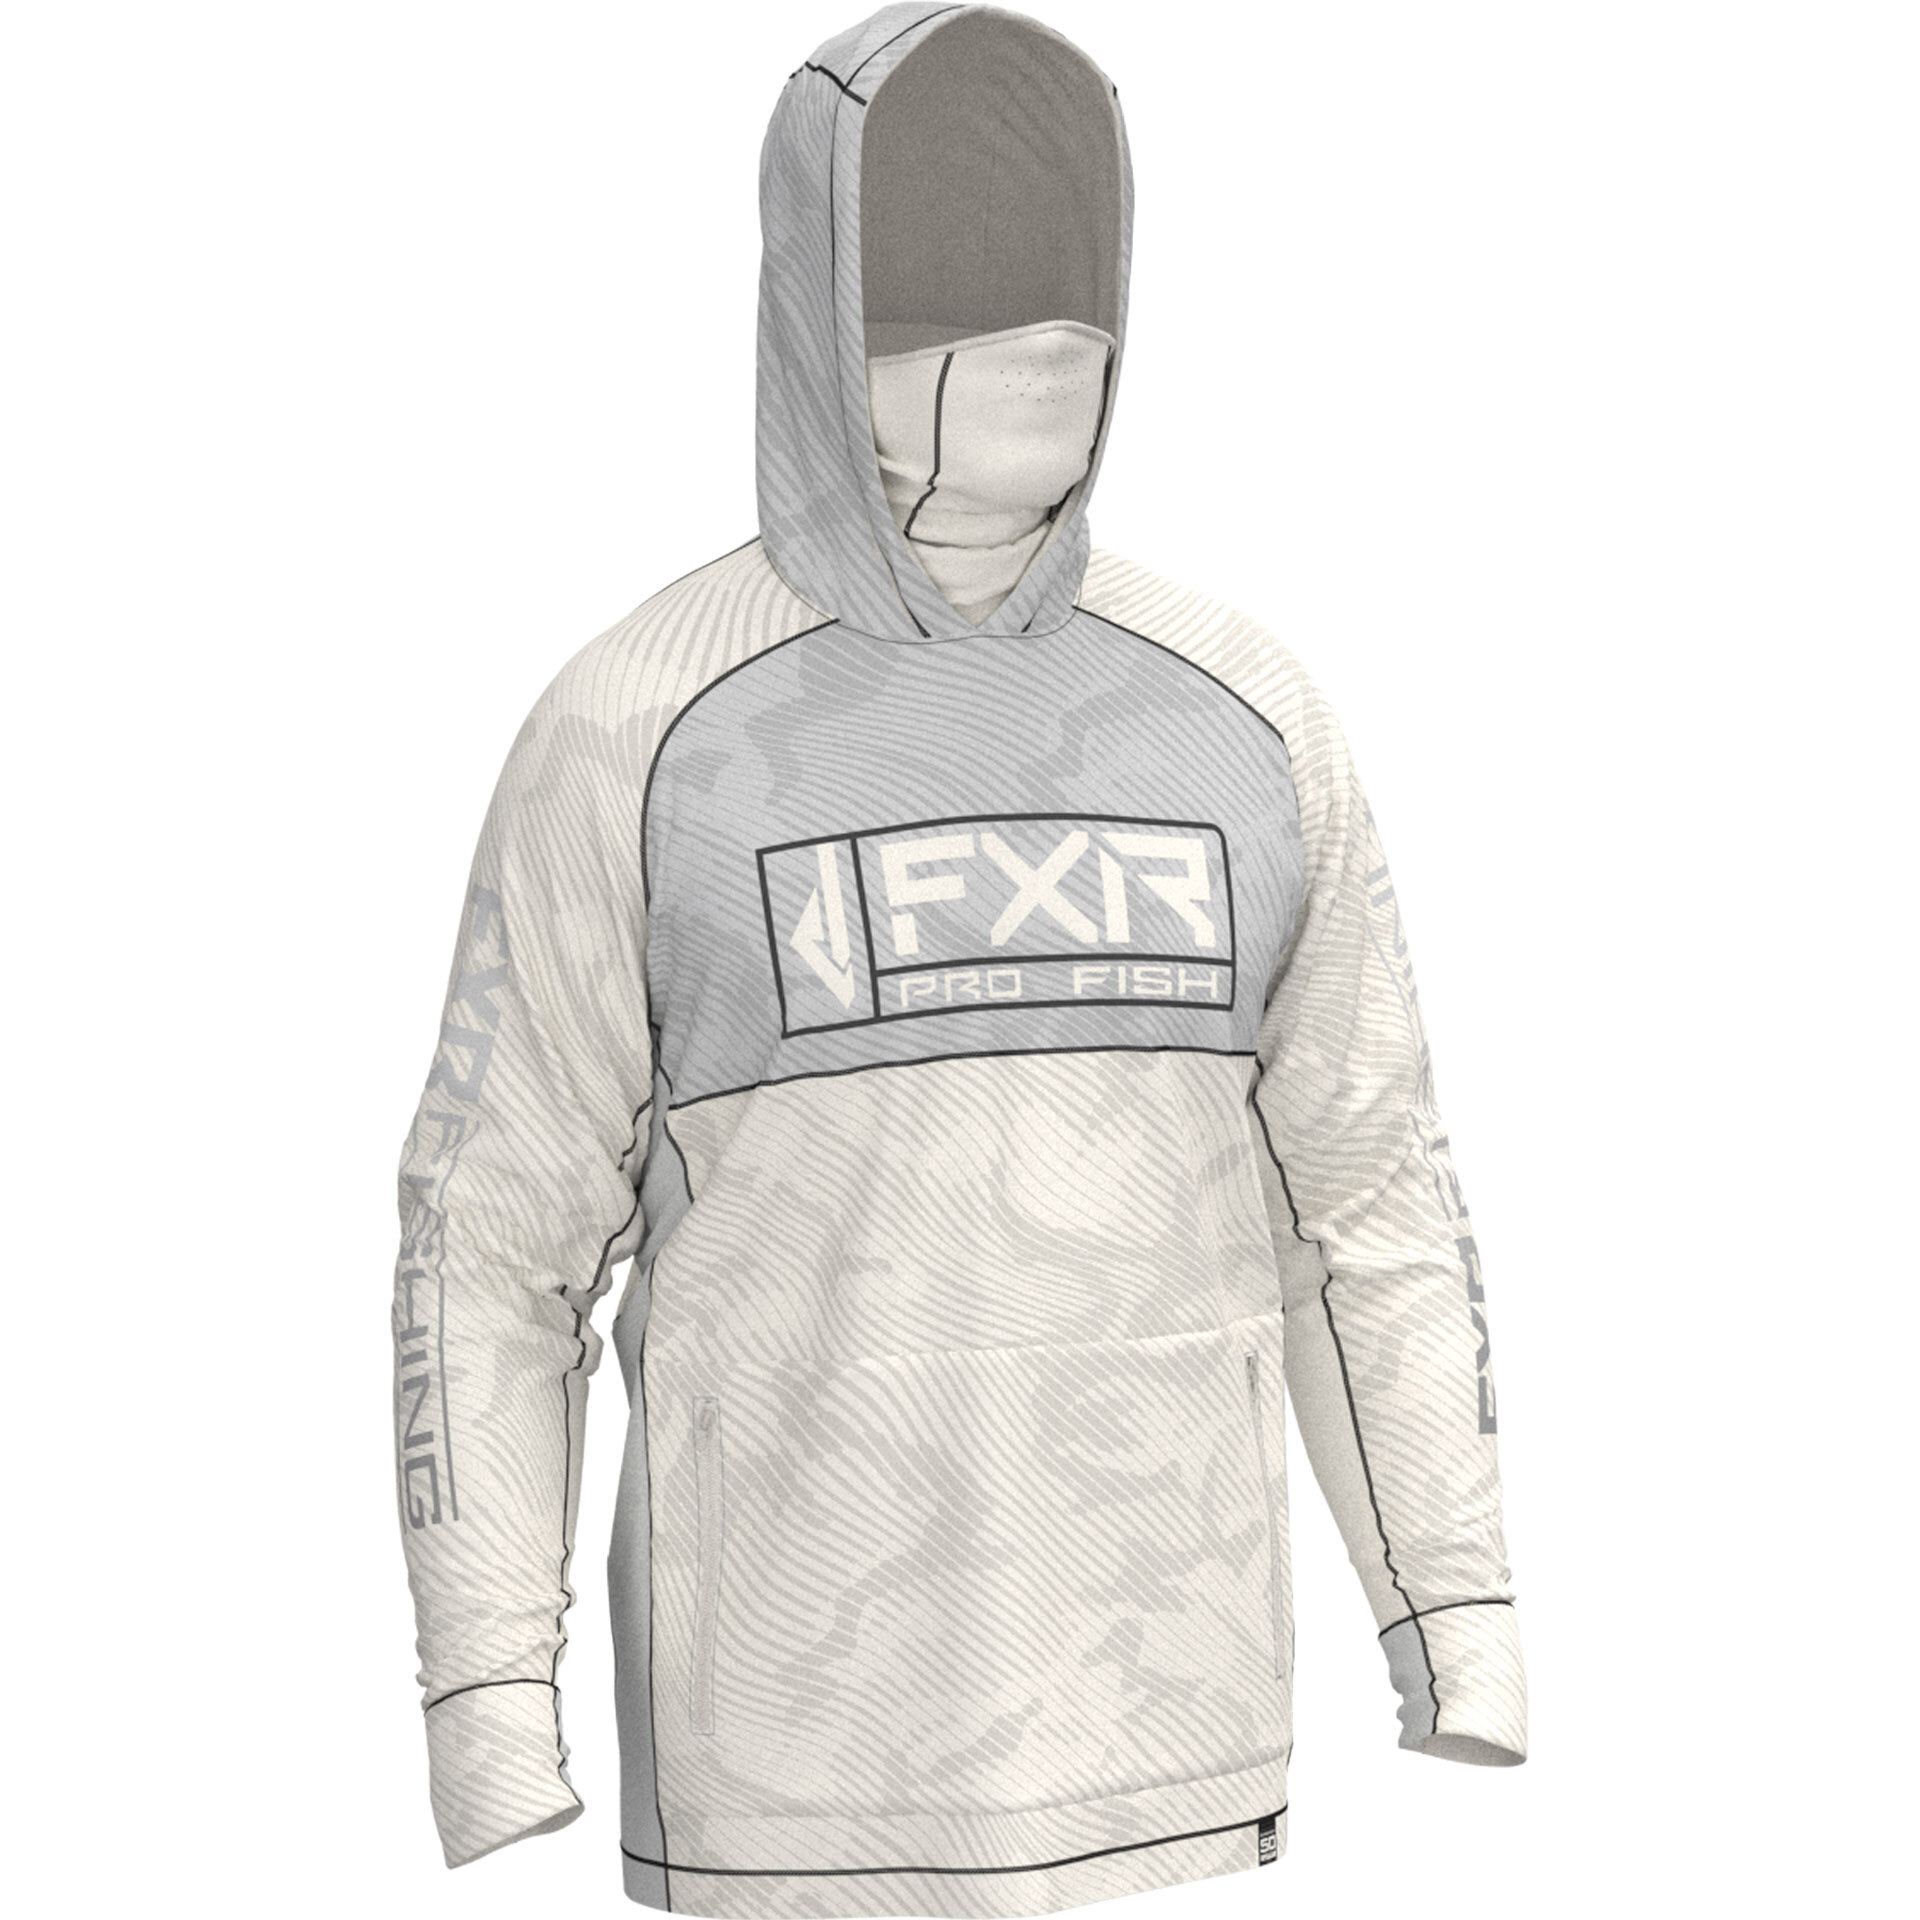 FXR® Tournament Pro Hybrid UPF Pullover Hoodie Small white/grey